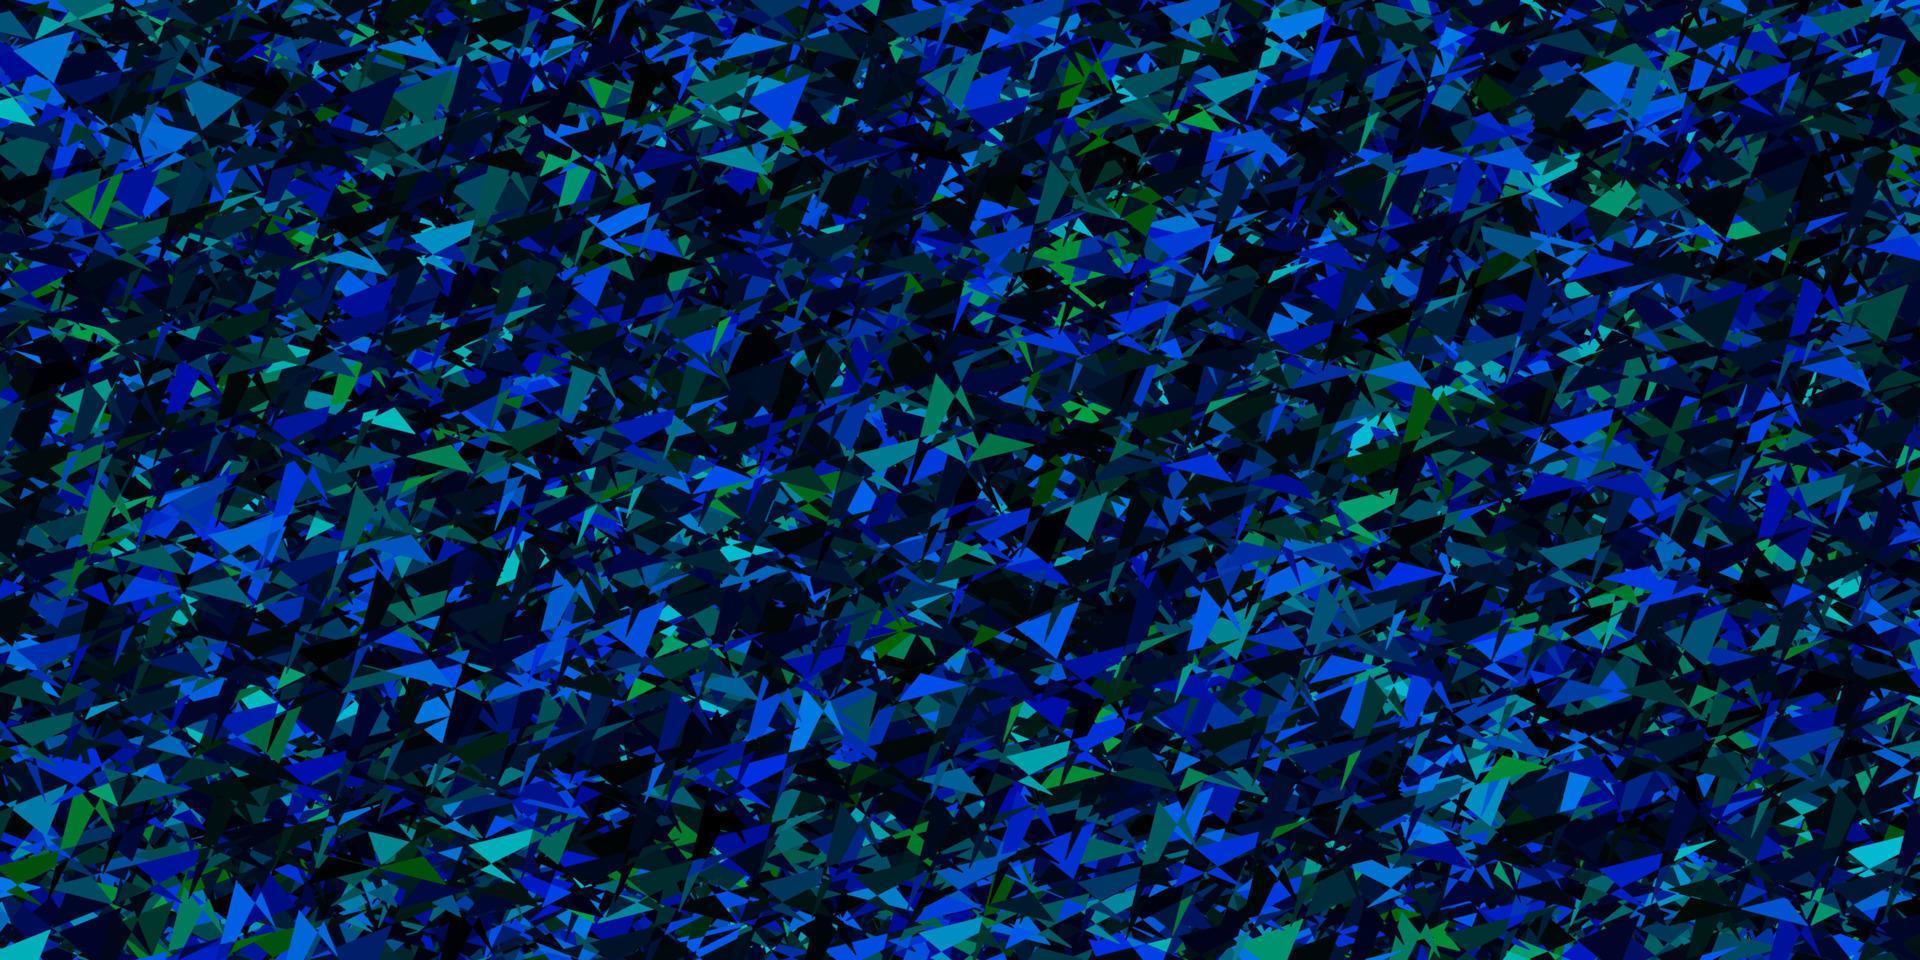 hellblauer, grüner Vektorhintergrund mit polygonalem Stil. vektor